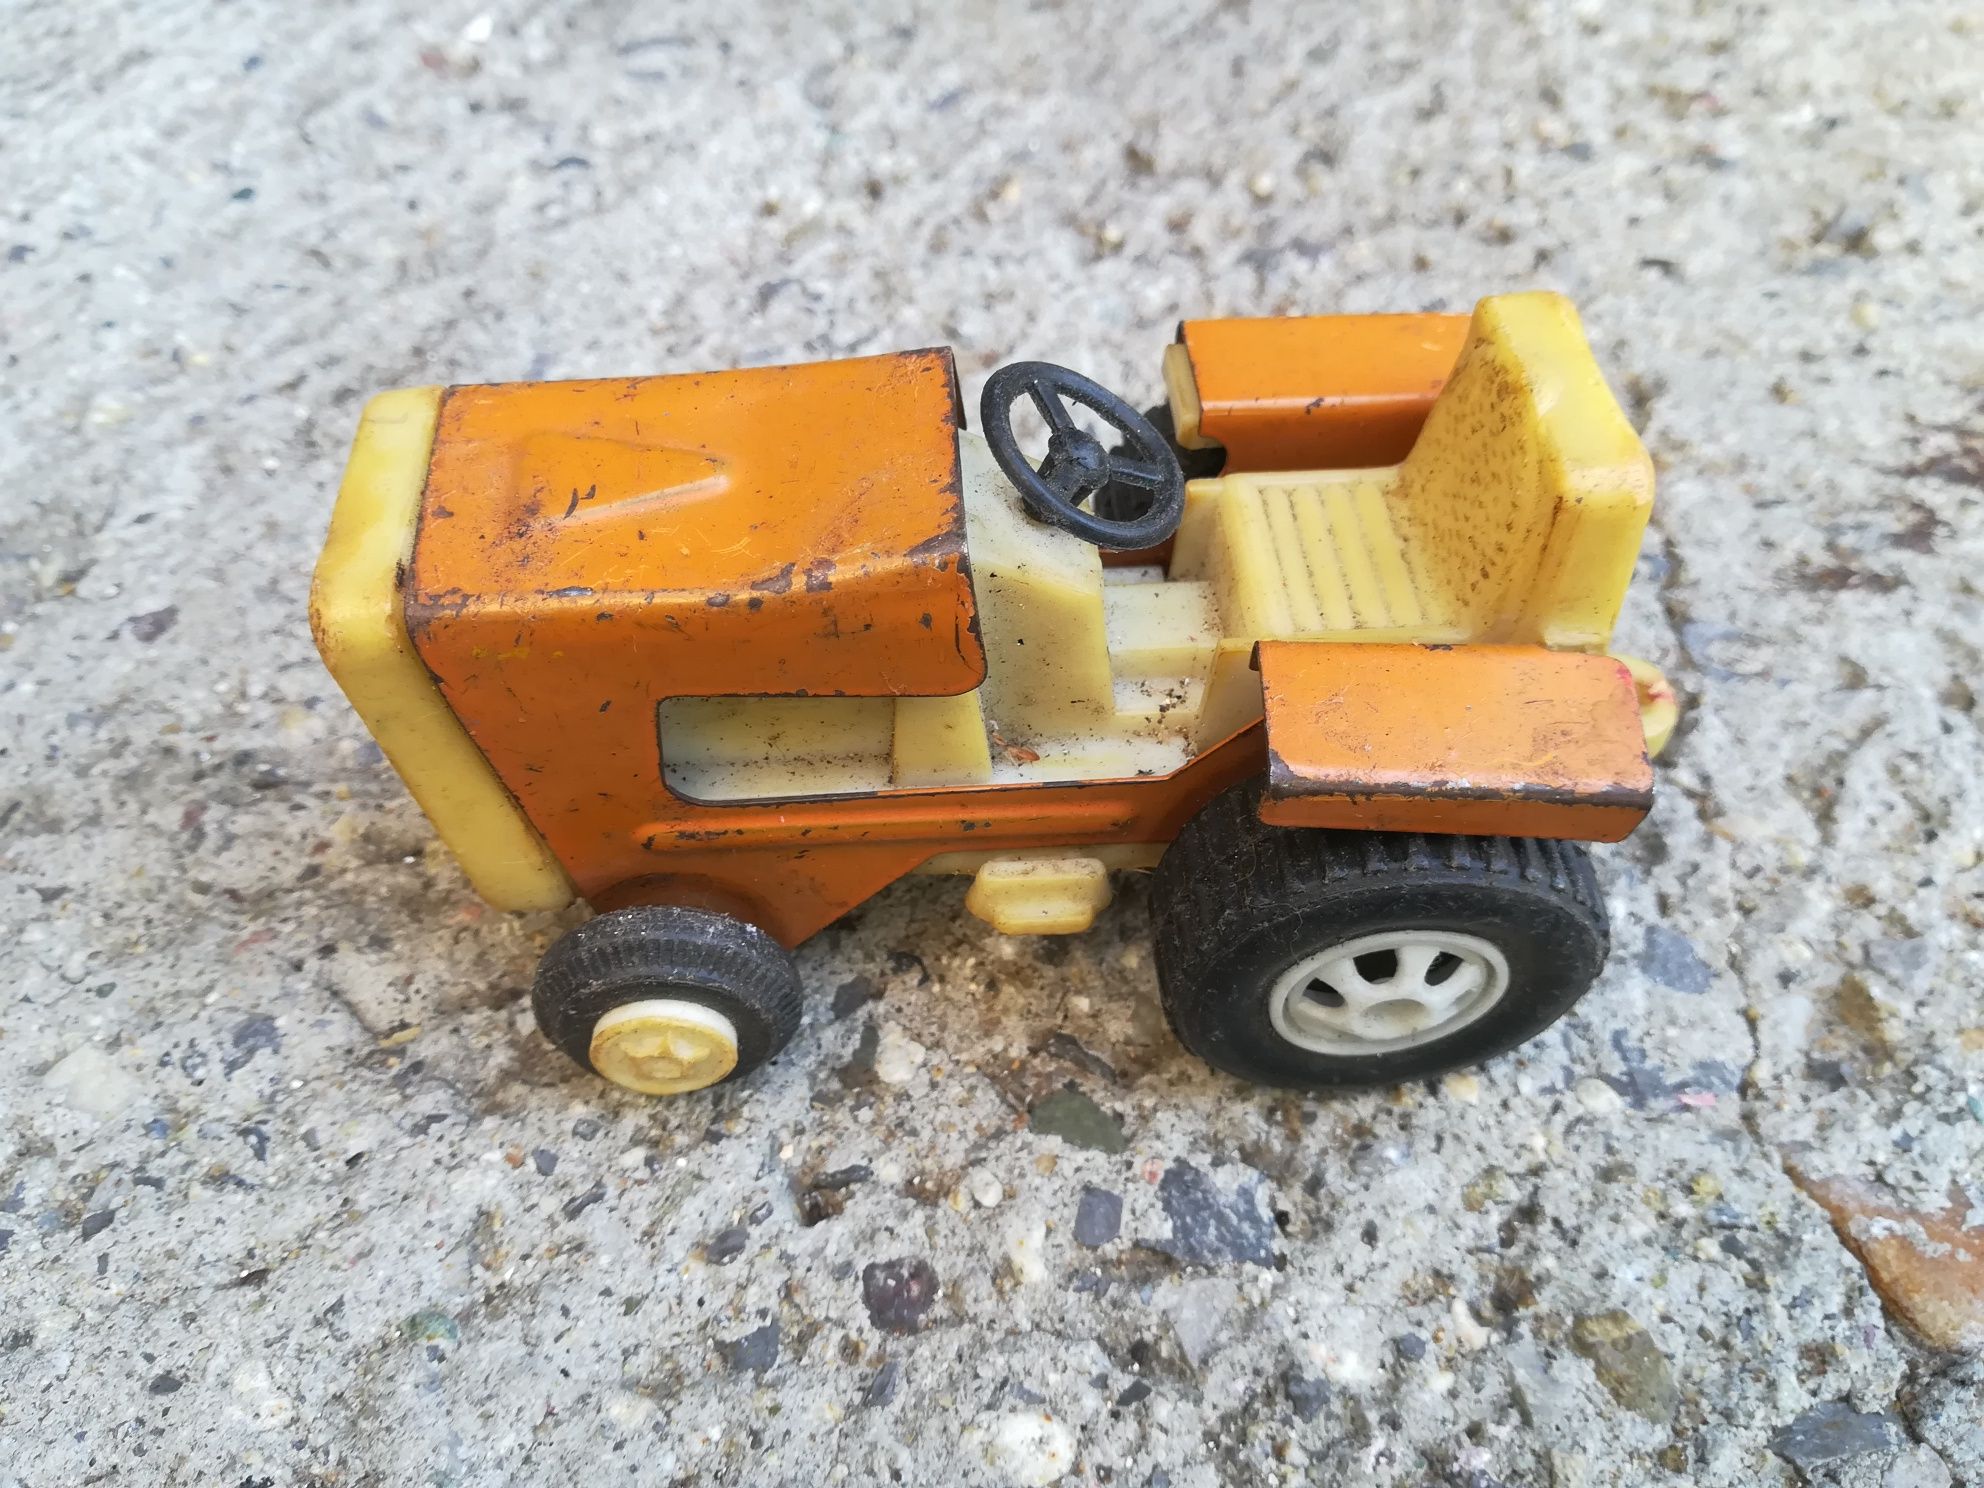 Винтич метални играчки/ метален локомотив камион трактор цистерна (рет